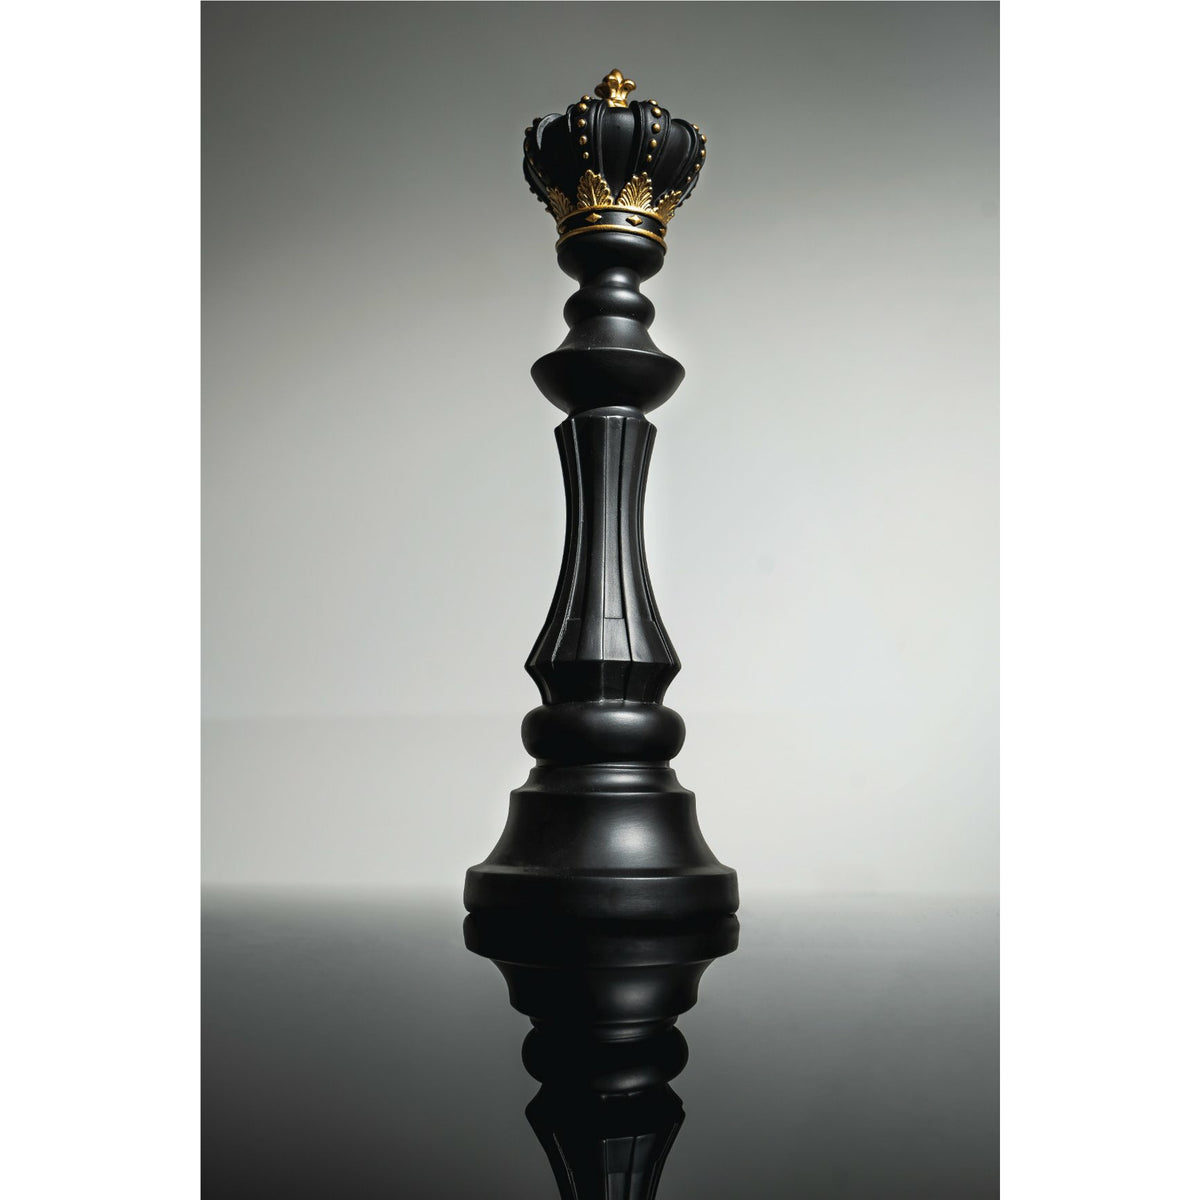 Black & Gold Chess Set Trio (50% OFF)